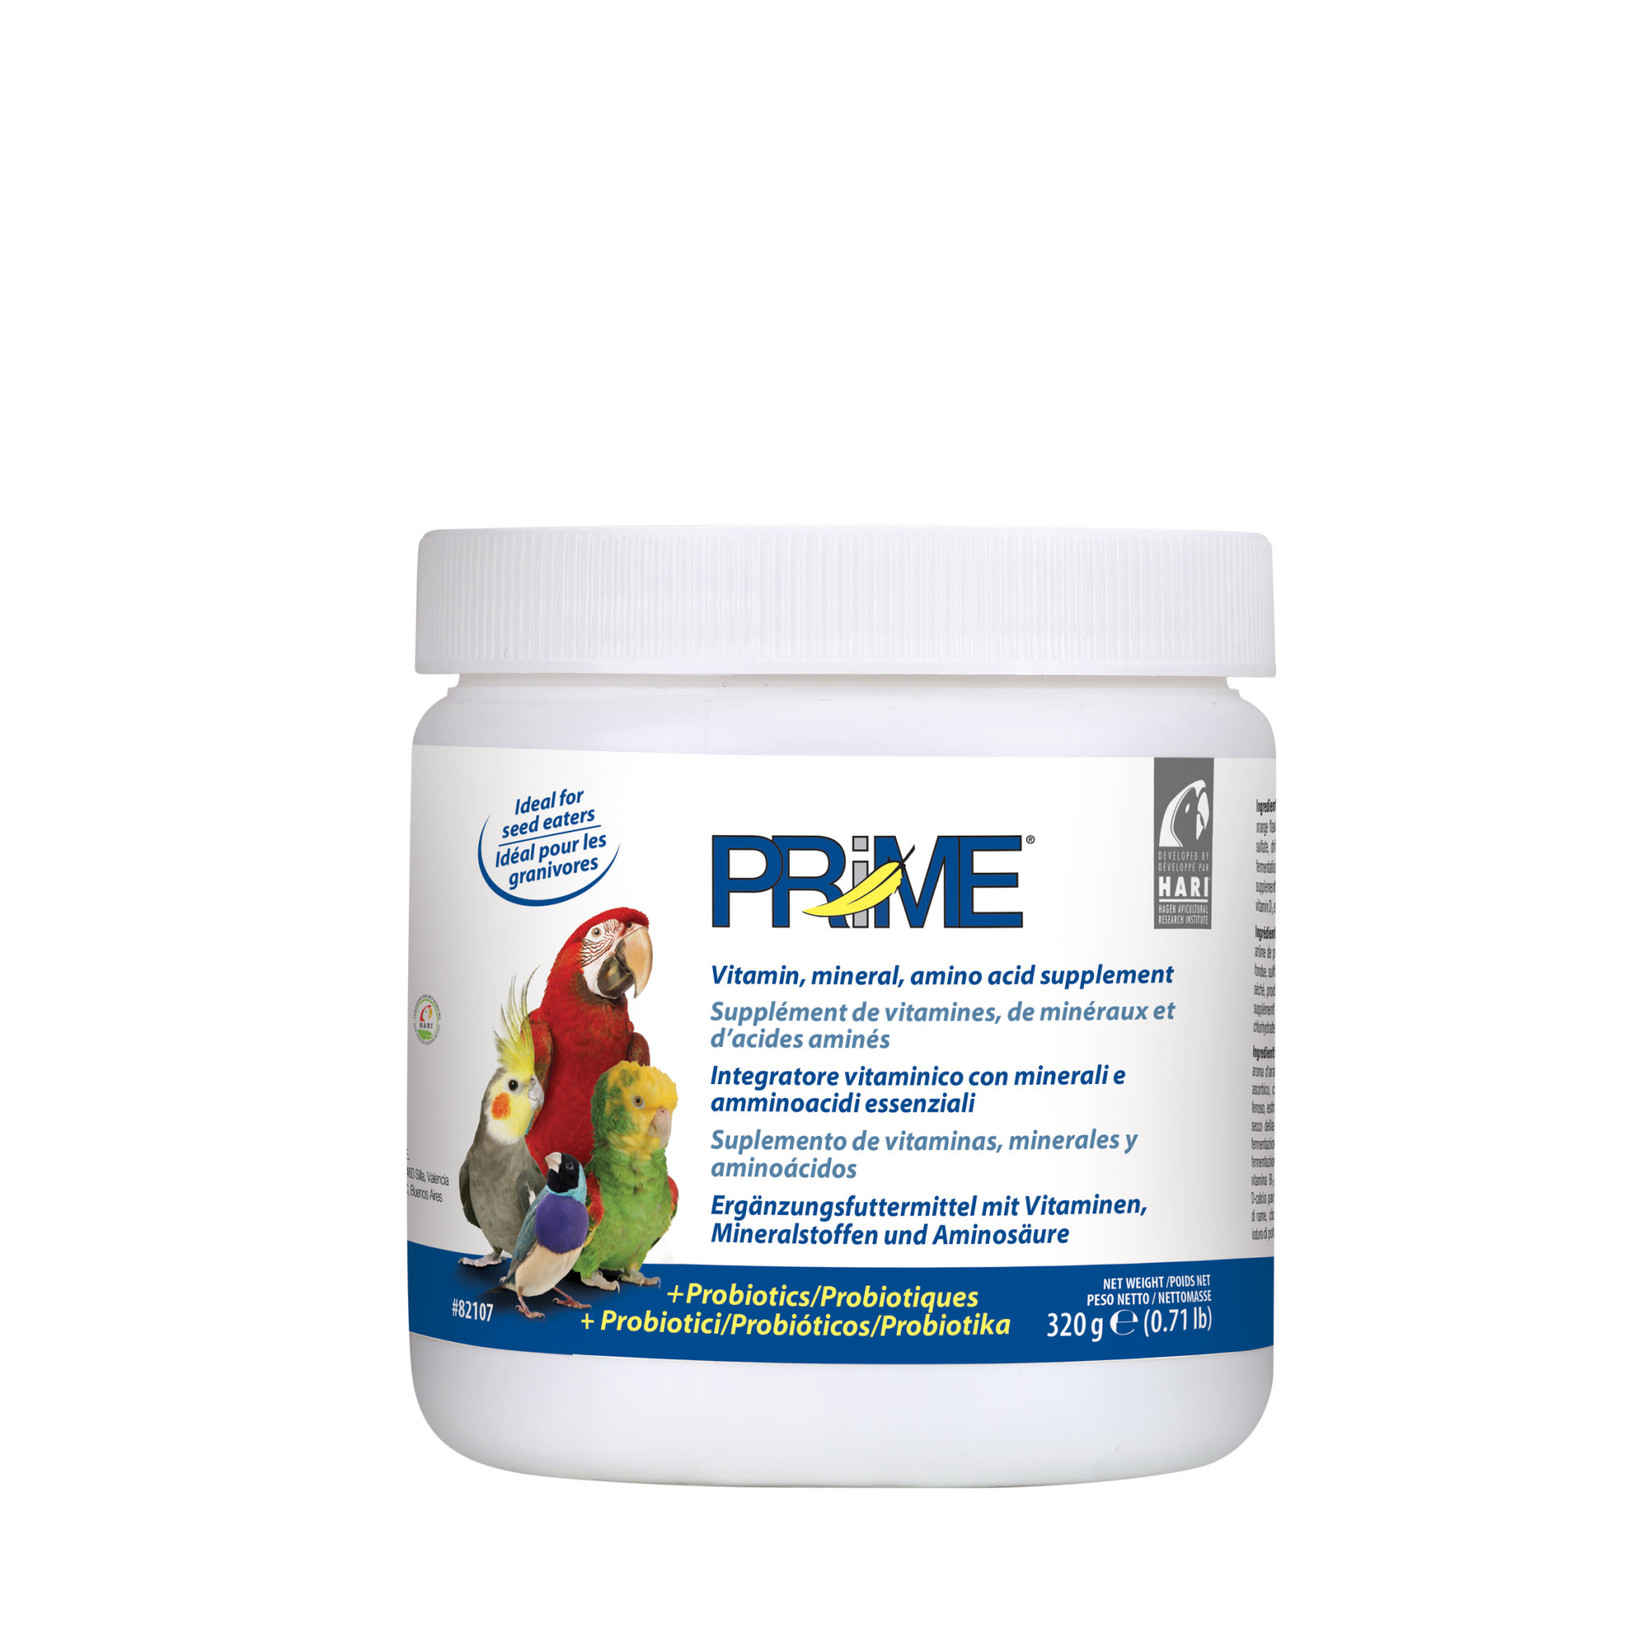 HARI Prime Vitamin Supplement - 320 g (0.71 lb)